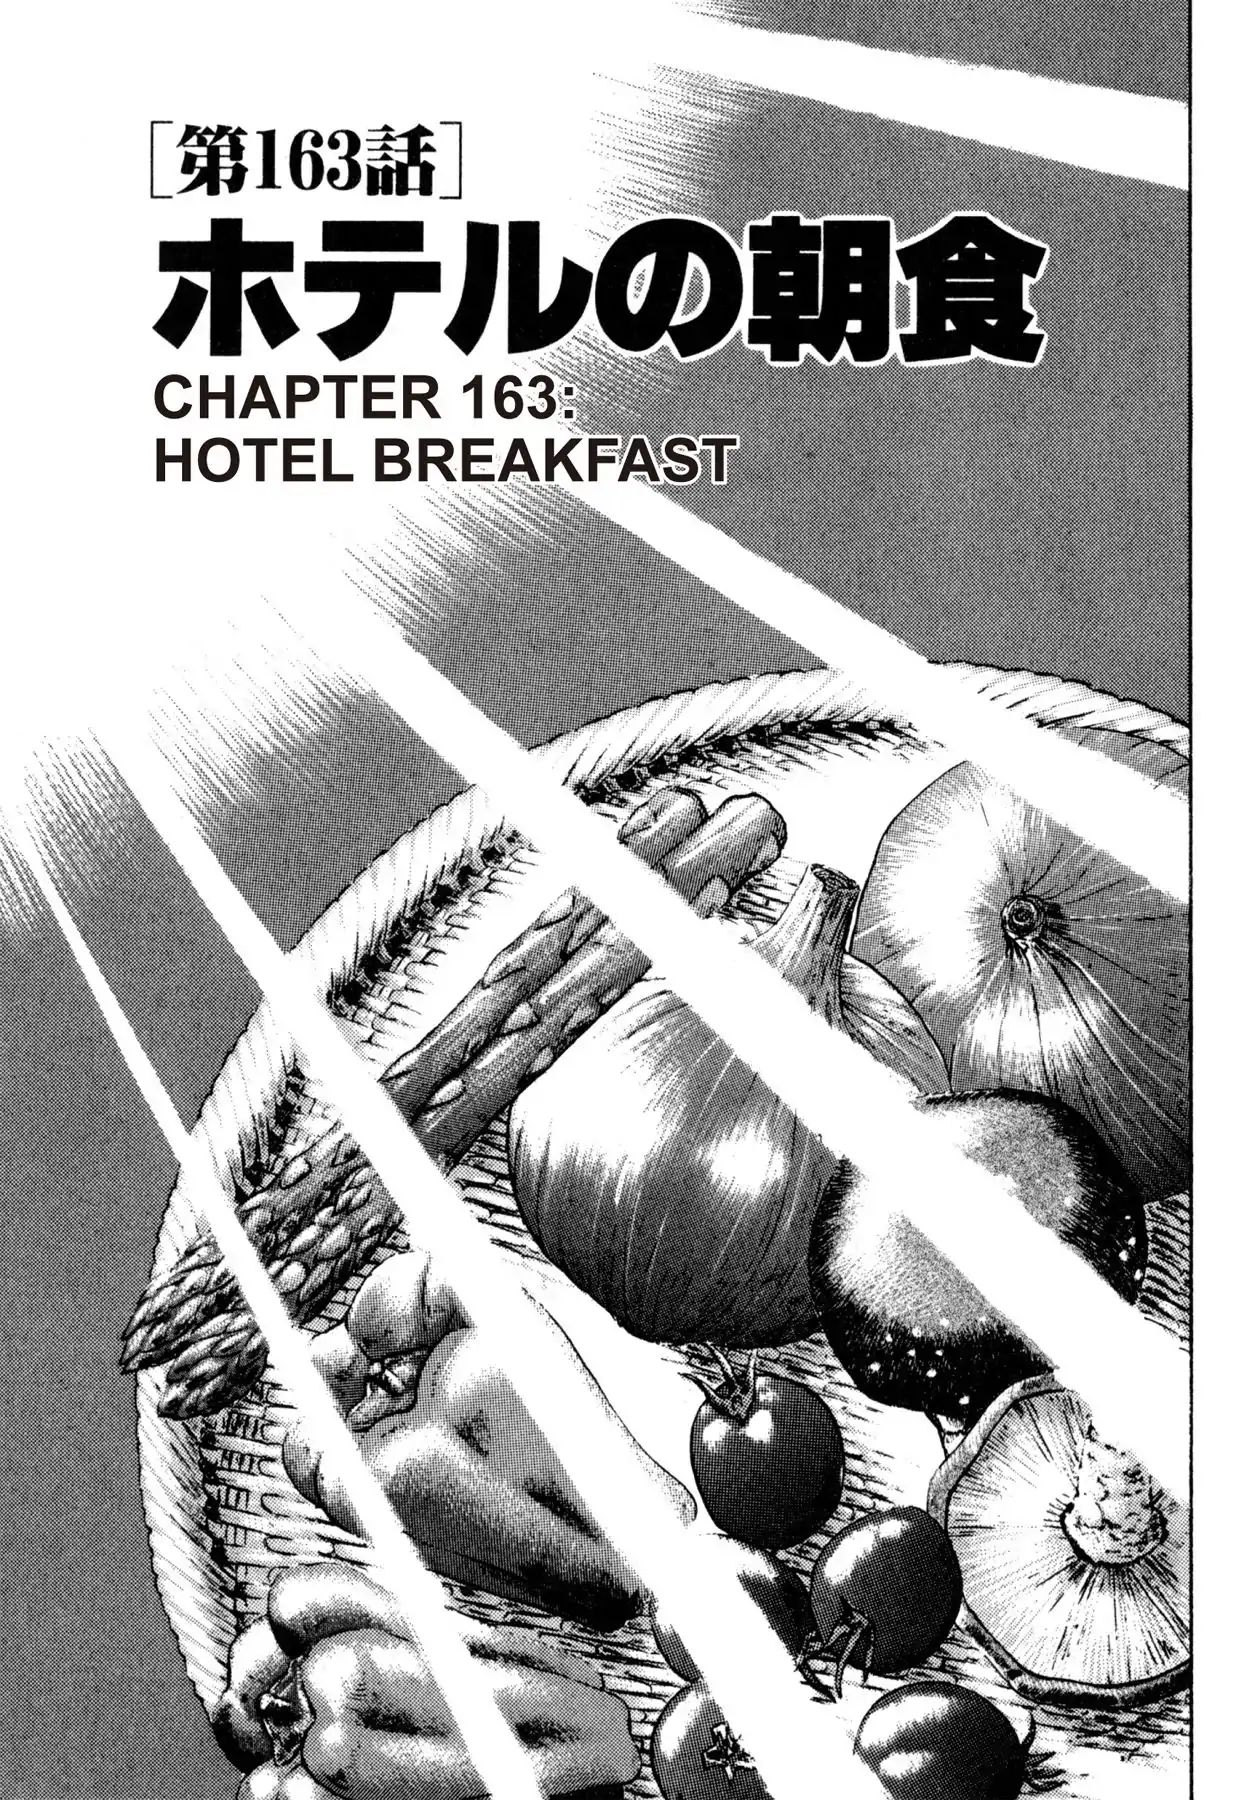 Shoku King VOL.18 CHAPTER 163: HOTEL BREAKFAST